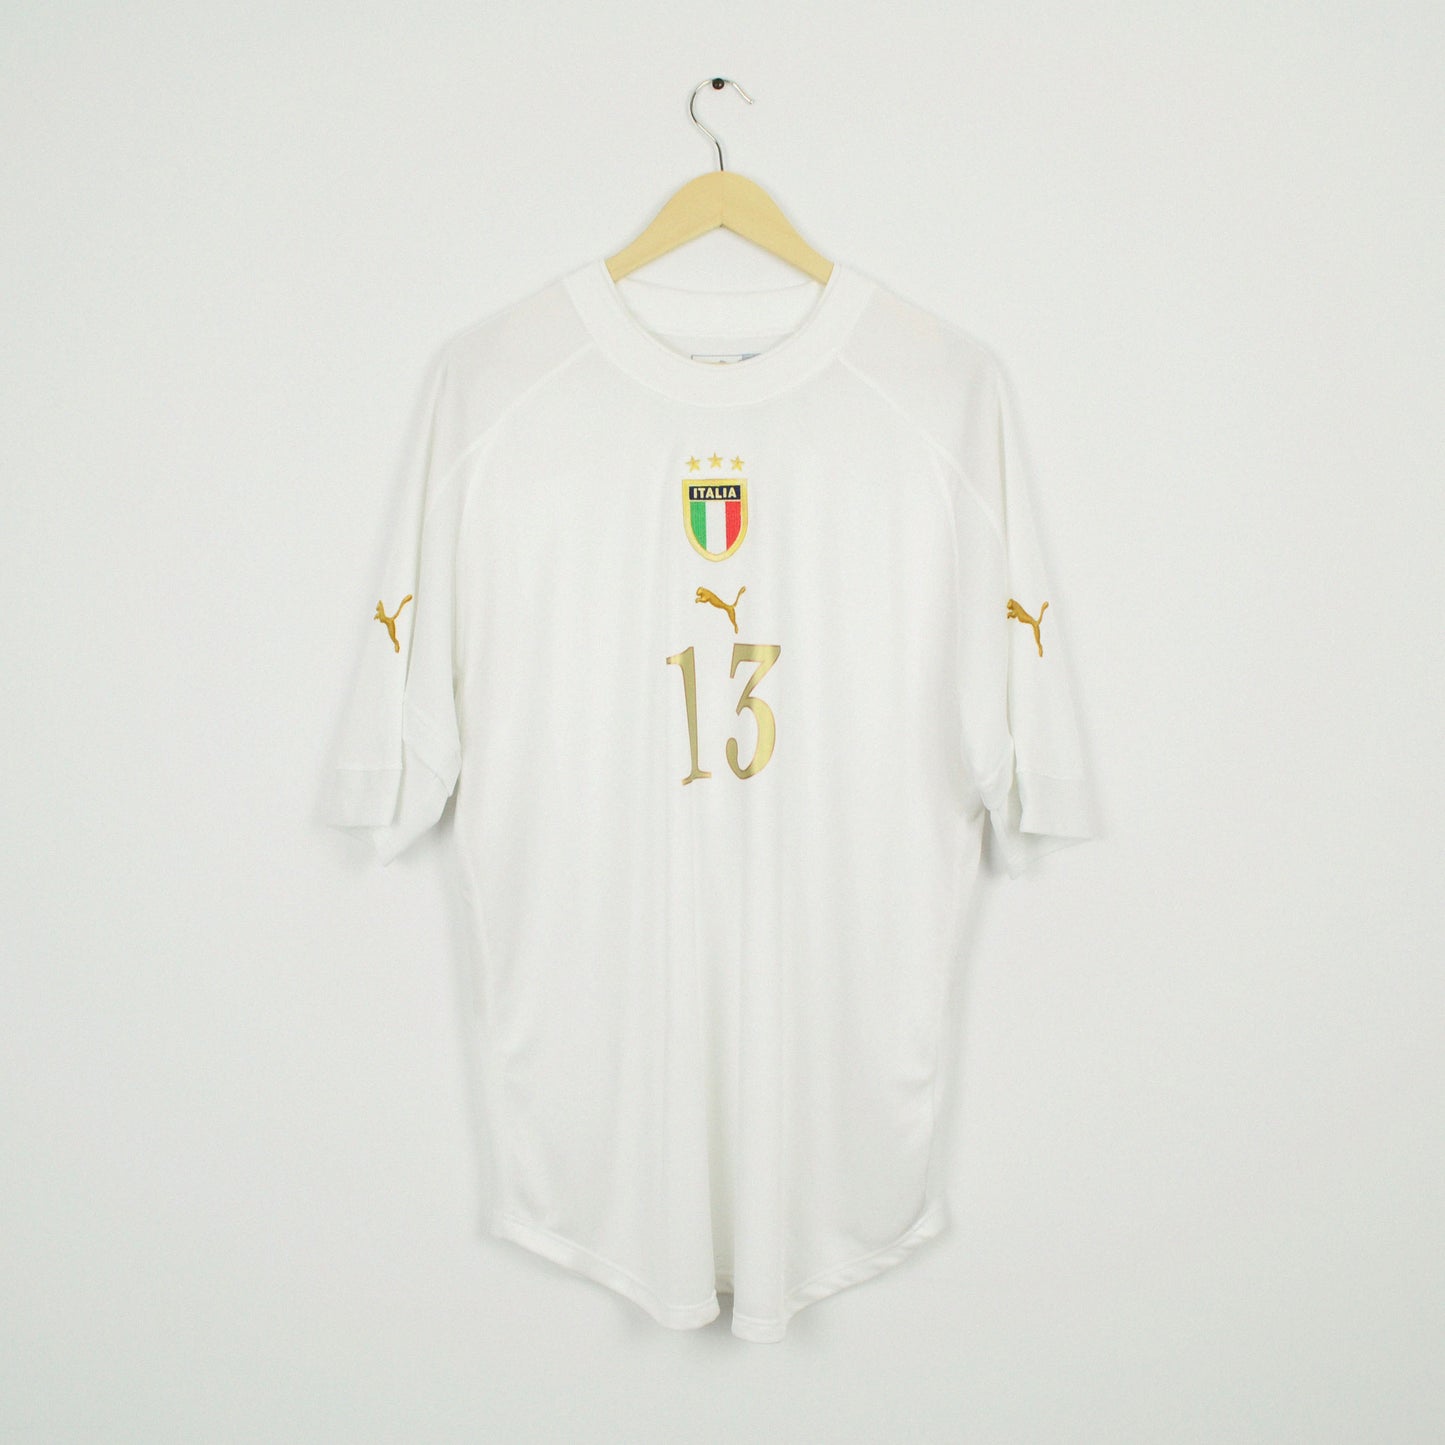 2004-06 Puma Italy Match Issue Away Shirt 13 XL